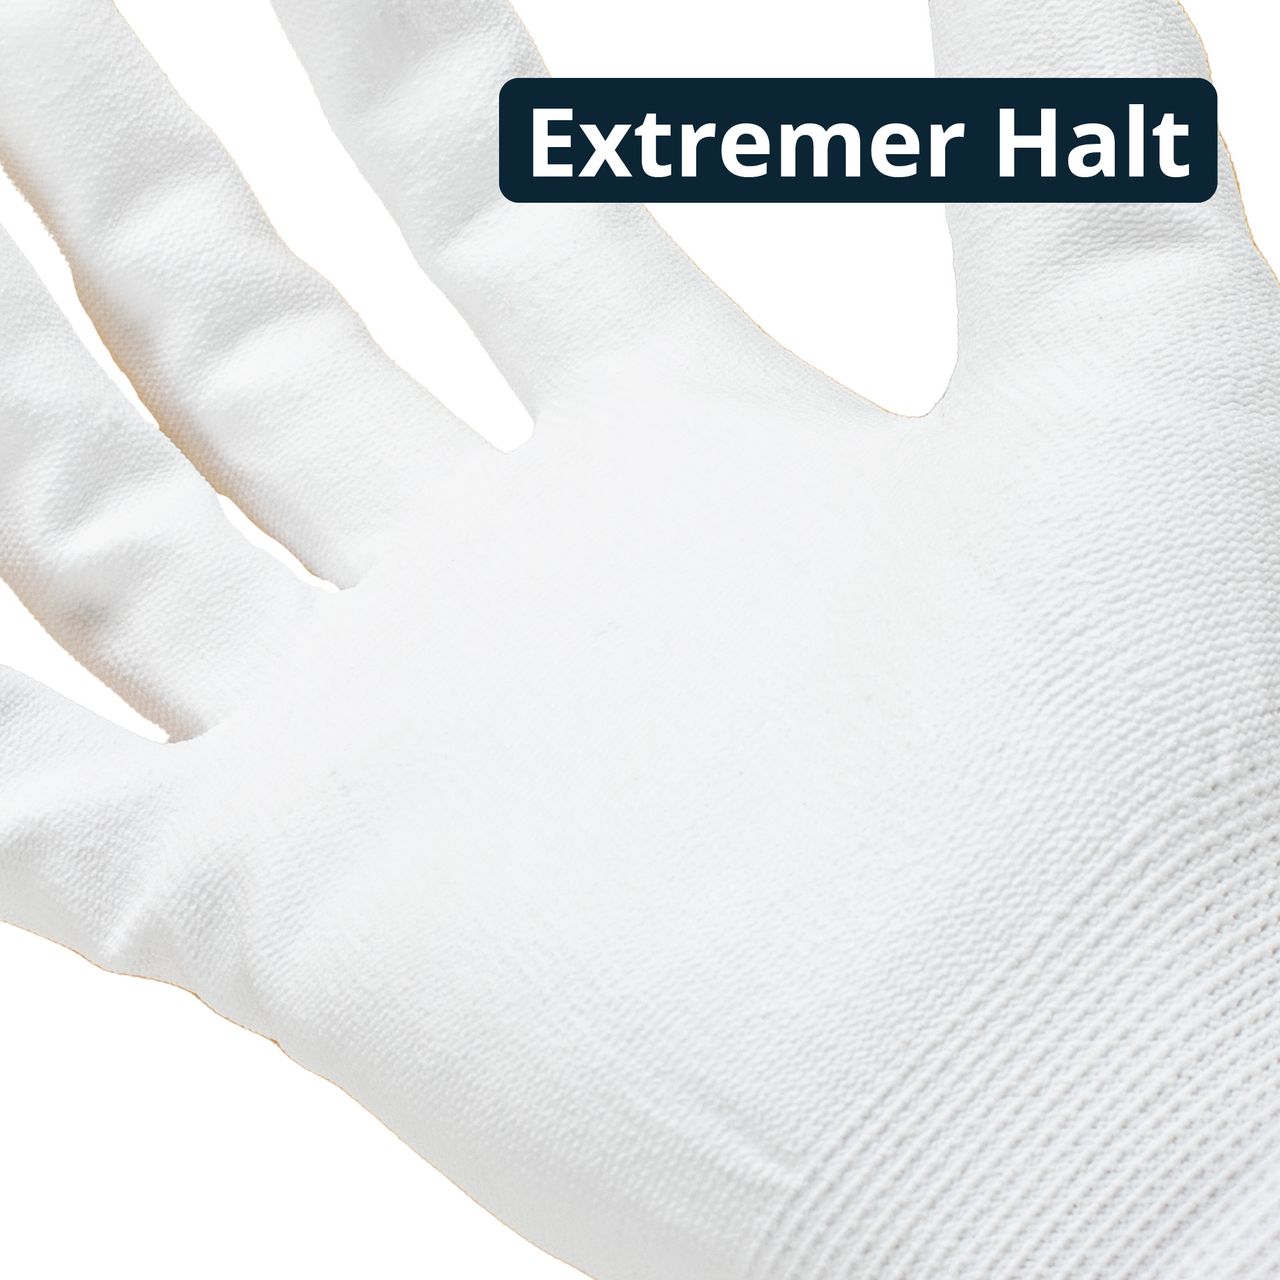 10 x HONEYWELL Schutzhandschuhe Nylon Weiß Gestrickt Polyamid Gr. 7/S Handschuhe